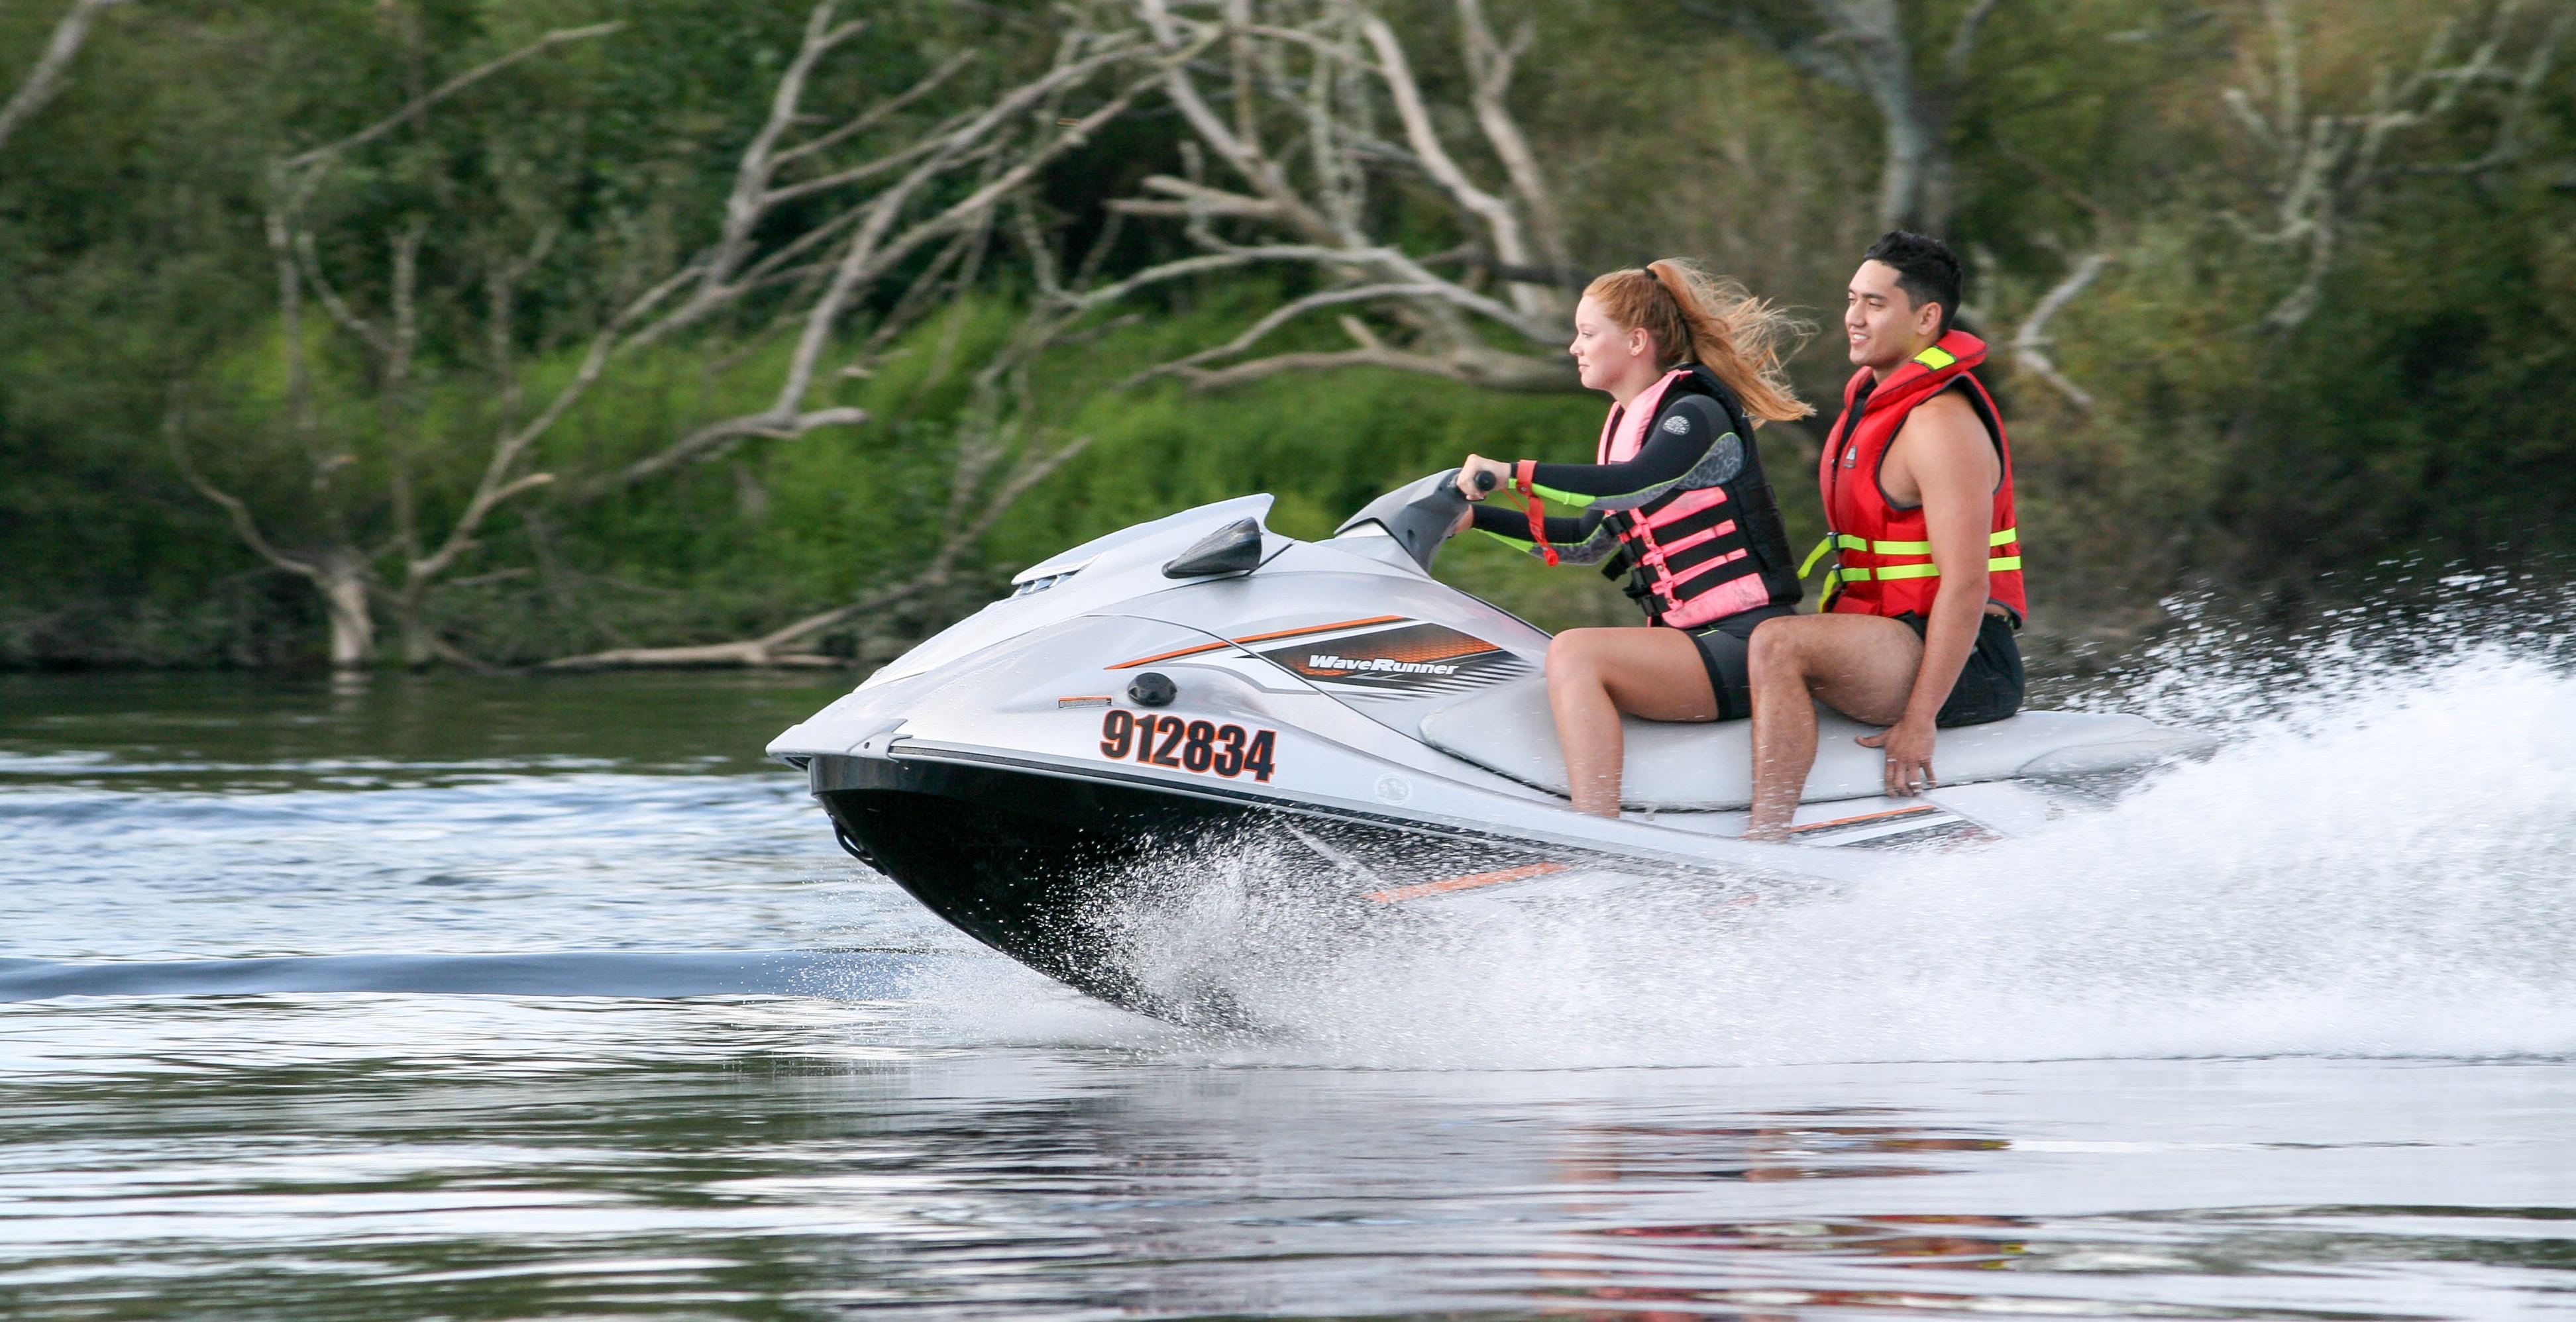 Image - Two people riding a jetski on a river